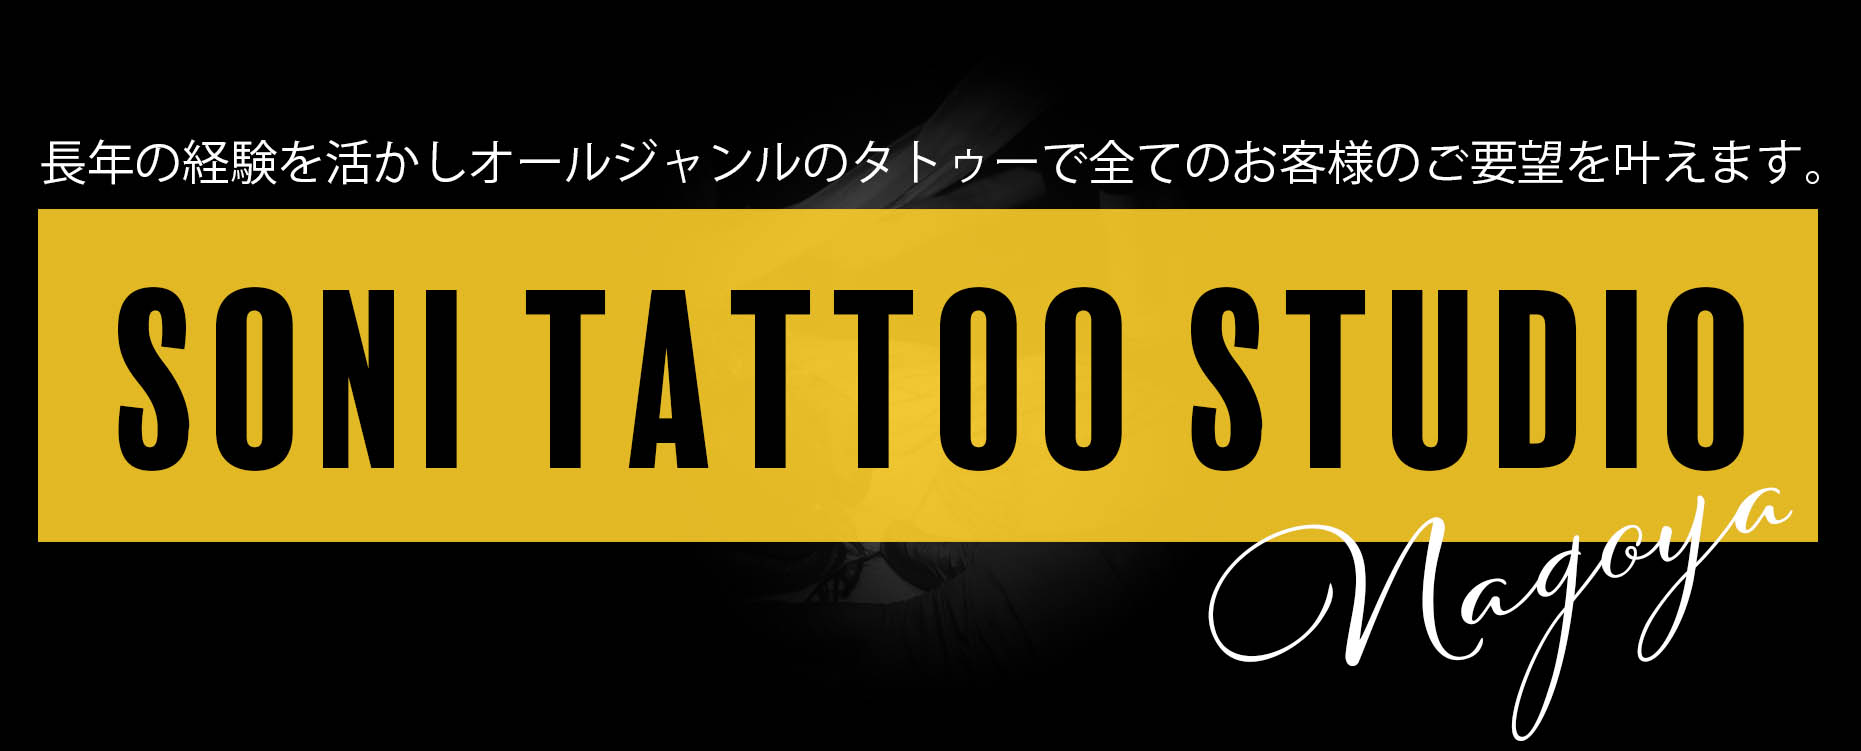 nagoya soni tattoo studio